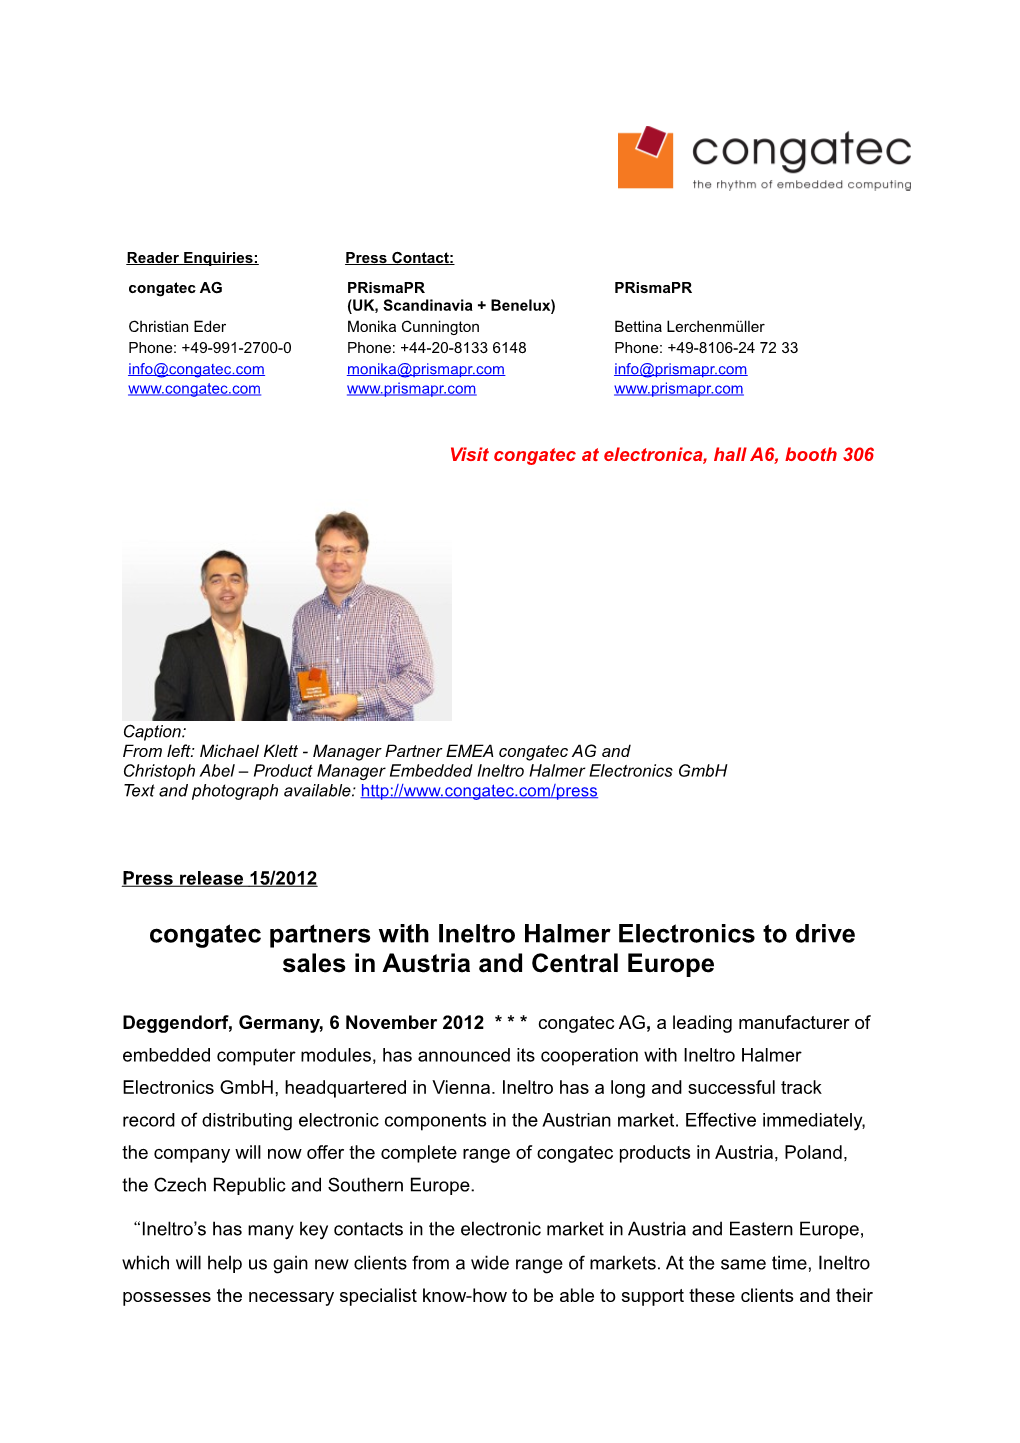 Ineltro Halmer Partnership